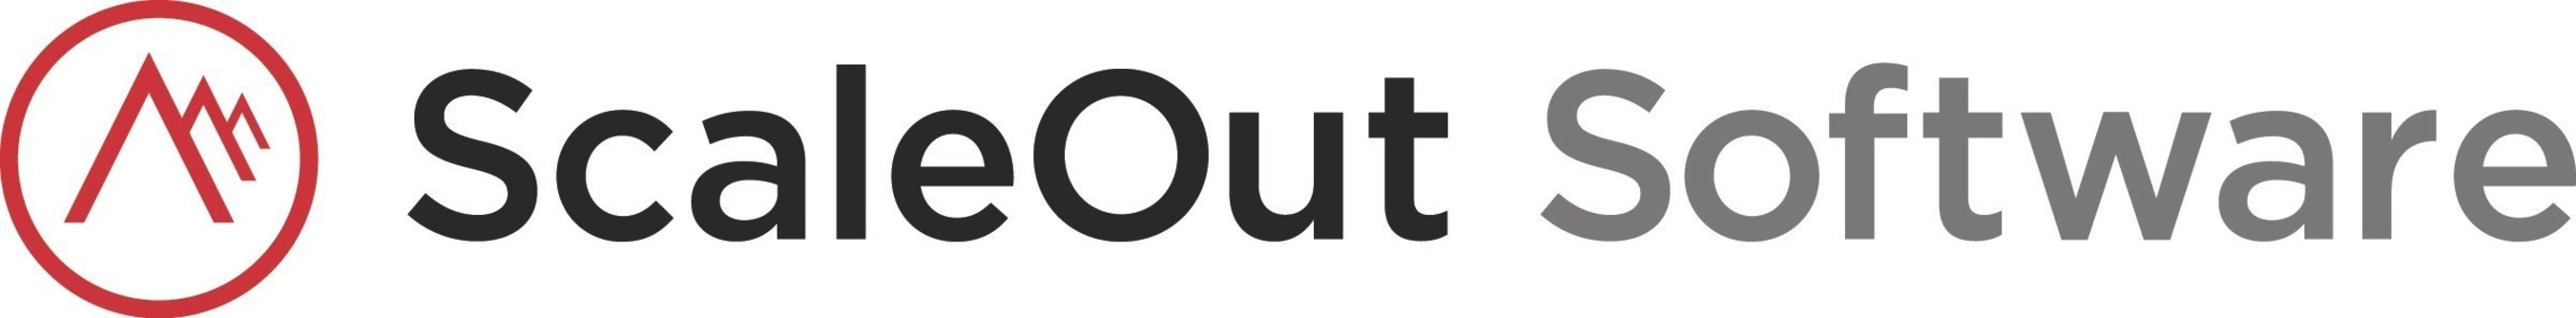 ScaleOut Software Logo